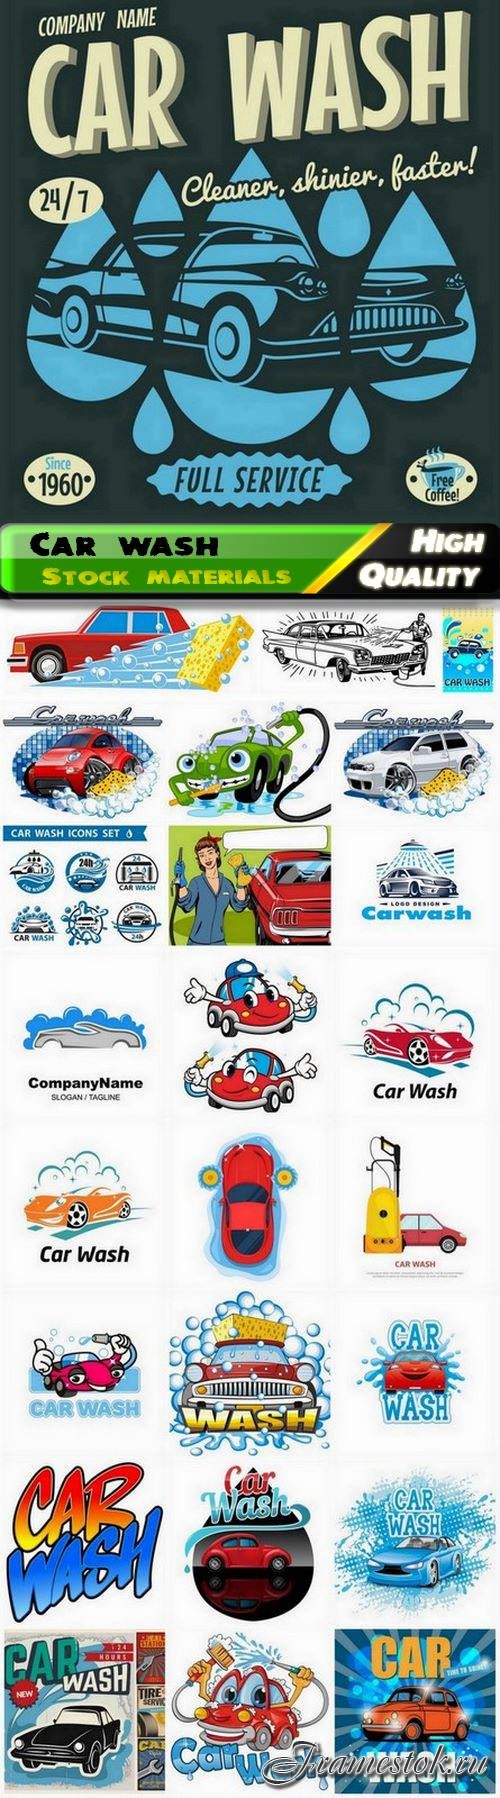 Car wash service and garage automobile repair - 25 Eps